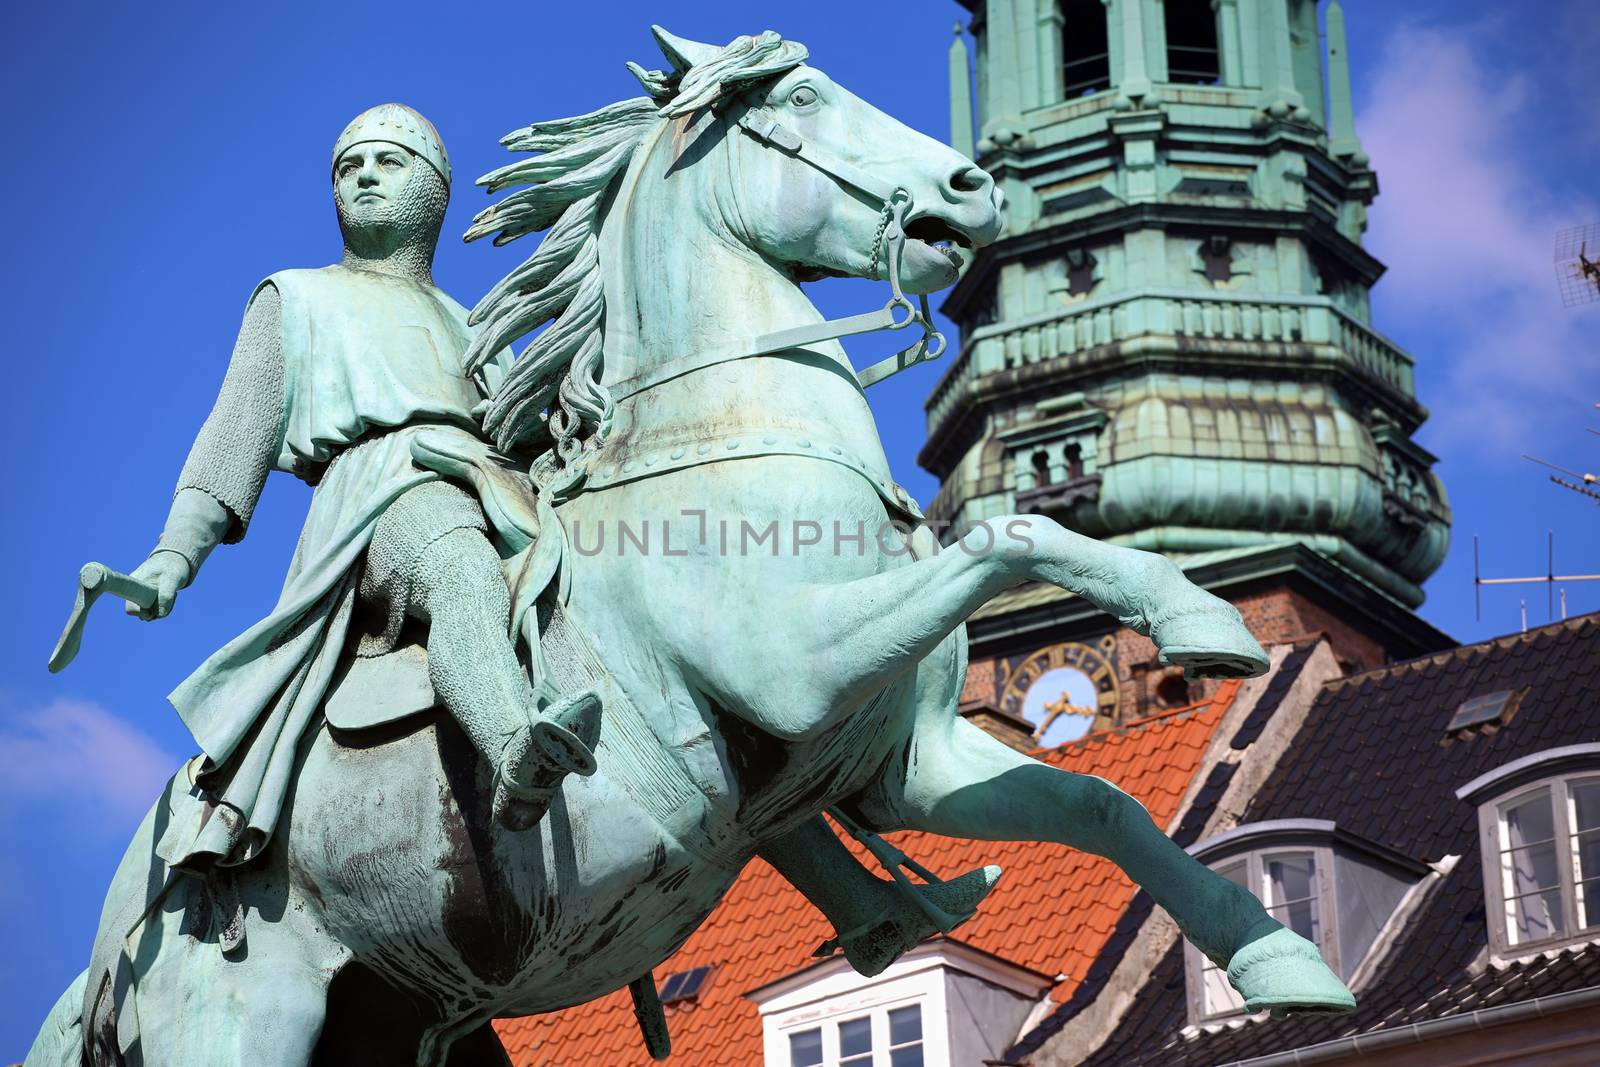 Hojbro Plads Square with the equestrian statue of Bishop Absalon and St Kunsthallen Nikolaj church in Copenhagen, Denmark